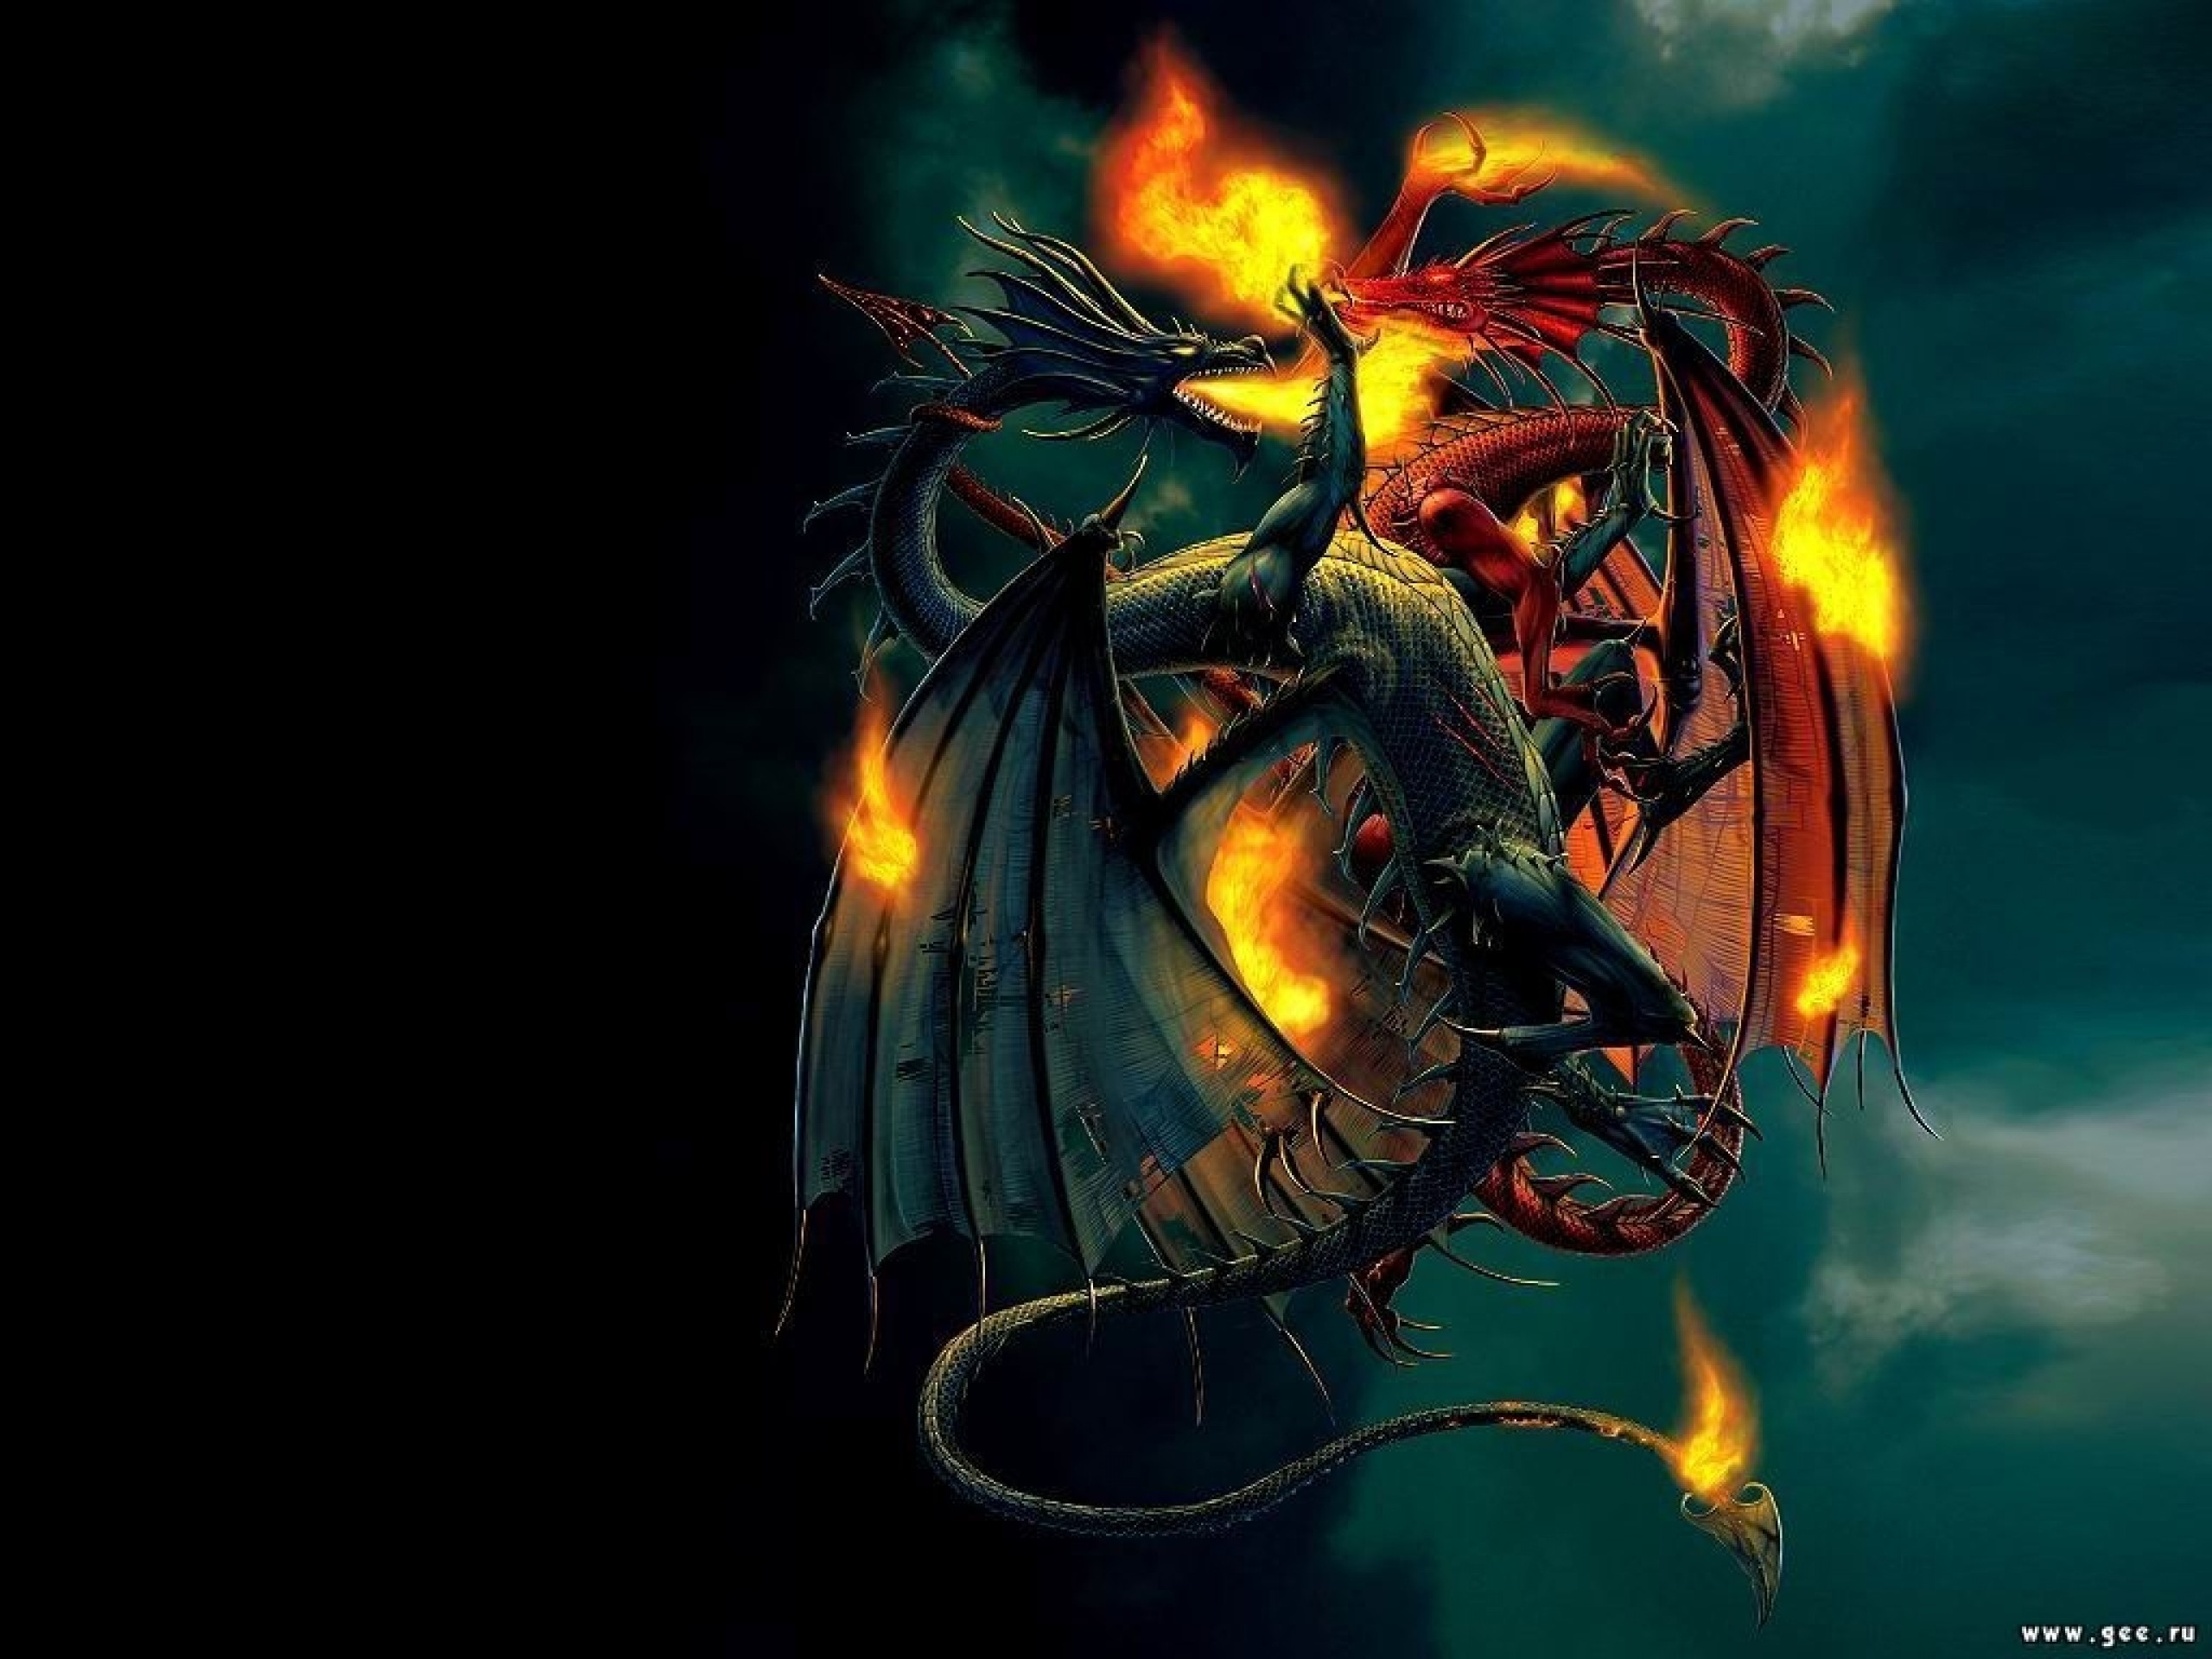 2560x1920 Battle of Dragon Artwork Wallpaper #5125 Wallpaper